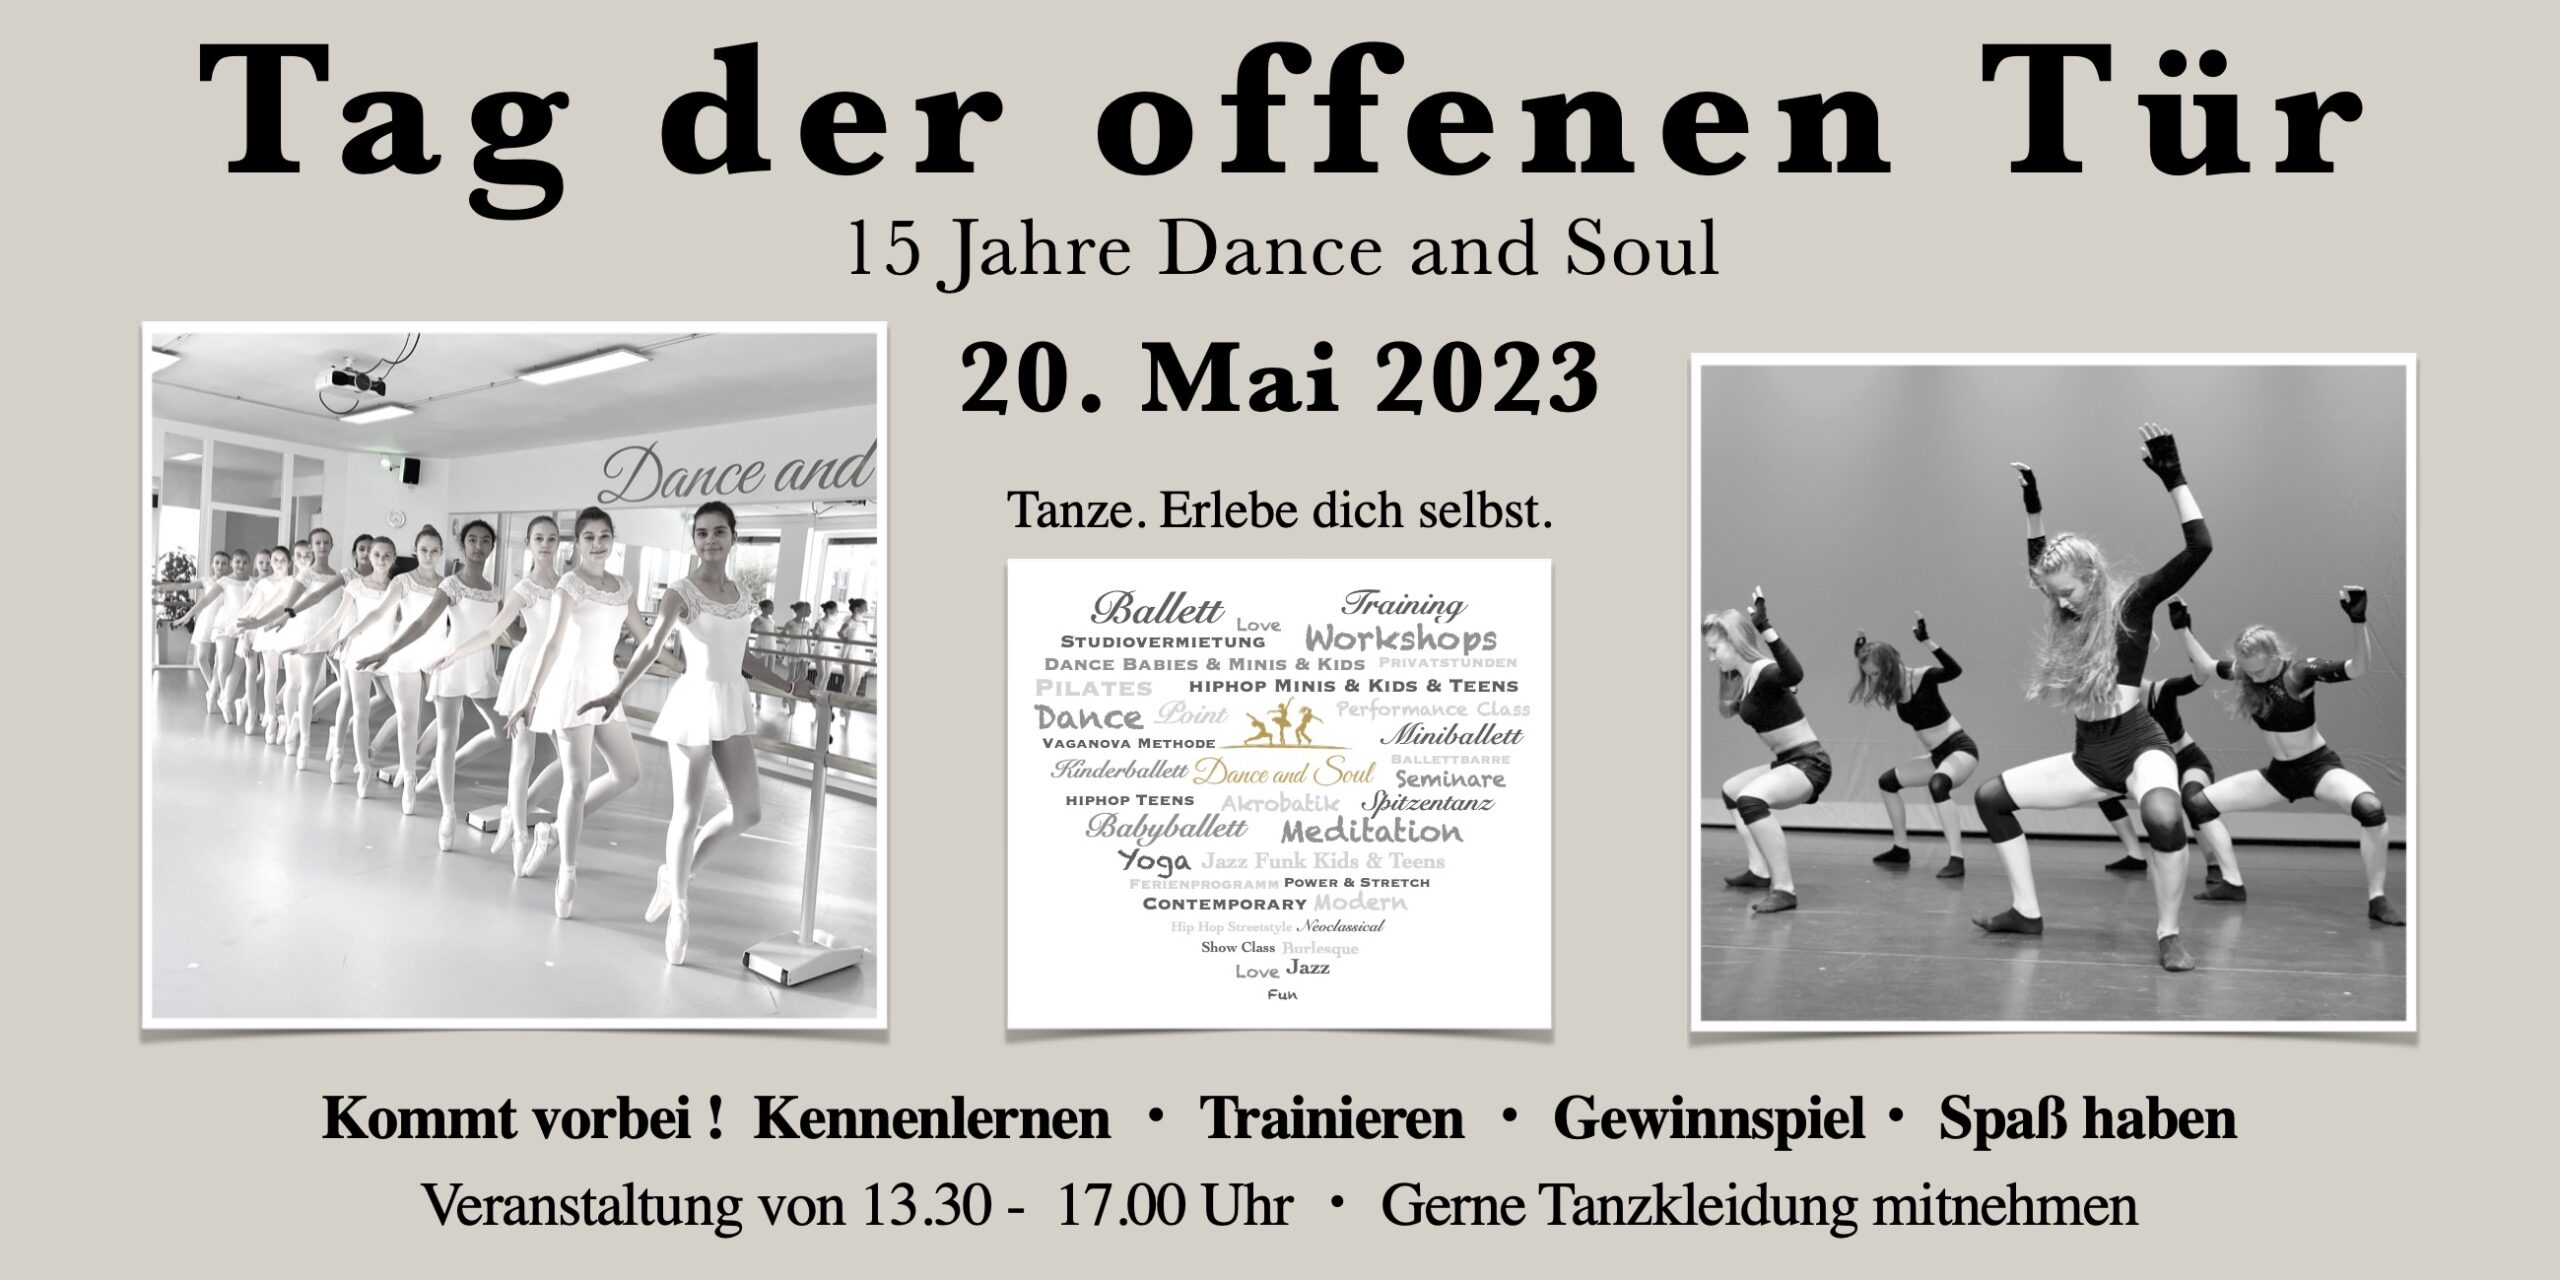 Dance and Soul, München, Pasing, Tag-der-offenen-Tuer-20.Mai-2023